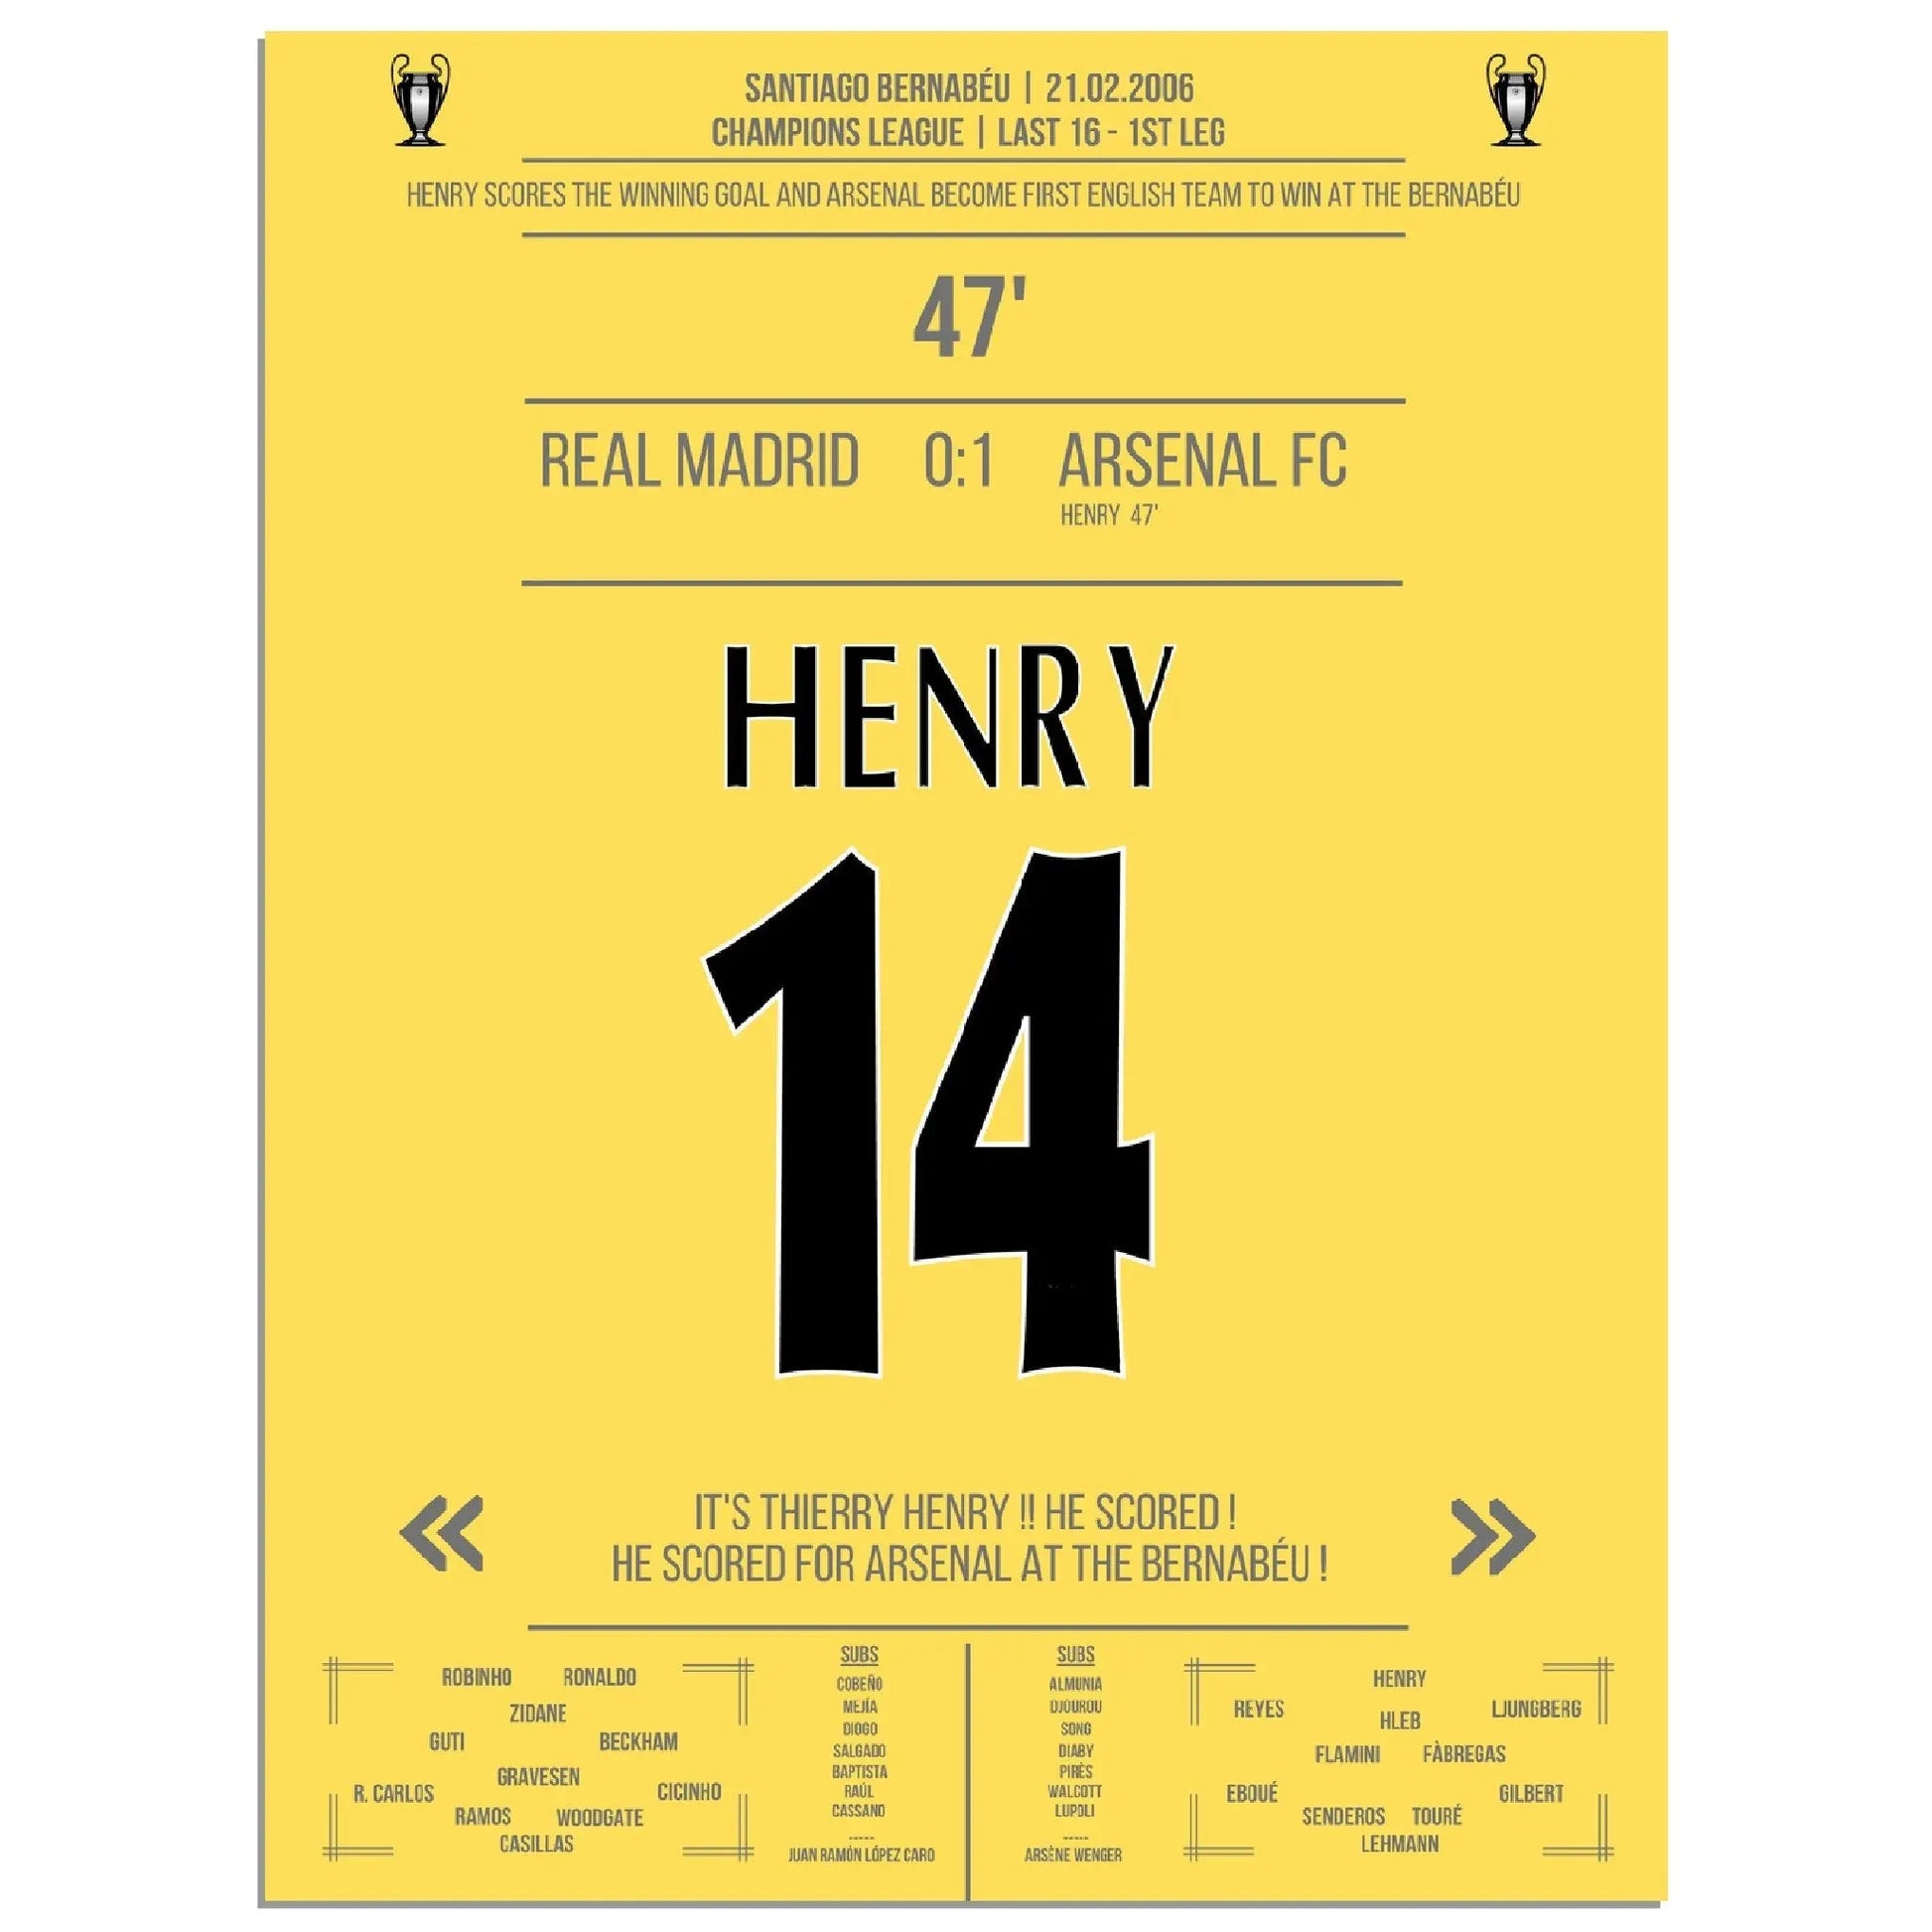 Legendäres Solo-Tor von Thierry Henry im Bernabeu Champions League 2006 